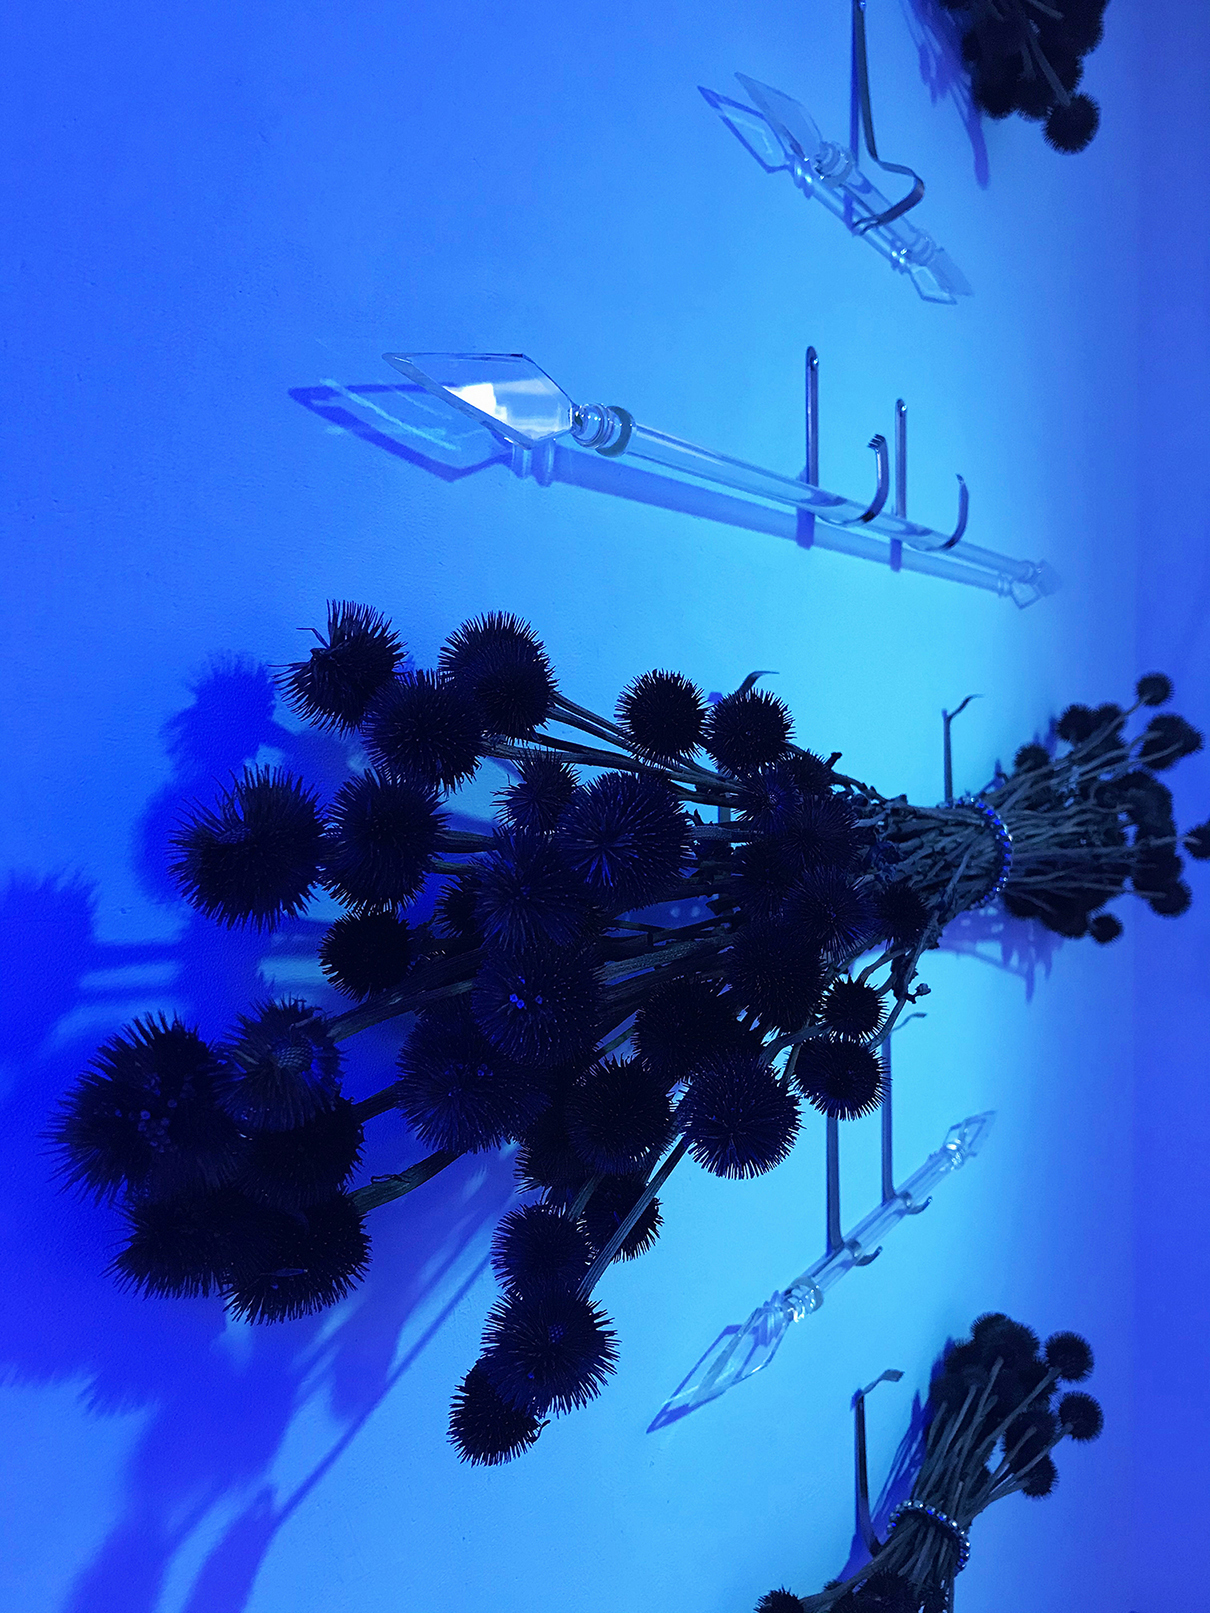 Floryan Varennes, Panoply 2.0, 2020 Double glass arrows, medical spacers, echinacea purpurea, steel chains, blue light. Collaboration: Cardis Glass Works, Switzerland, 130 x 140 cm